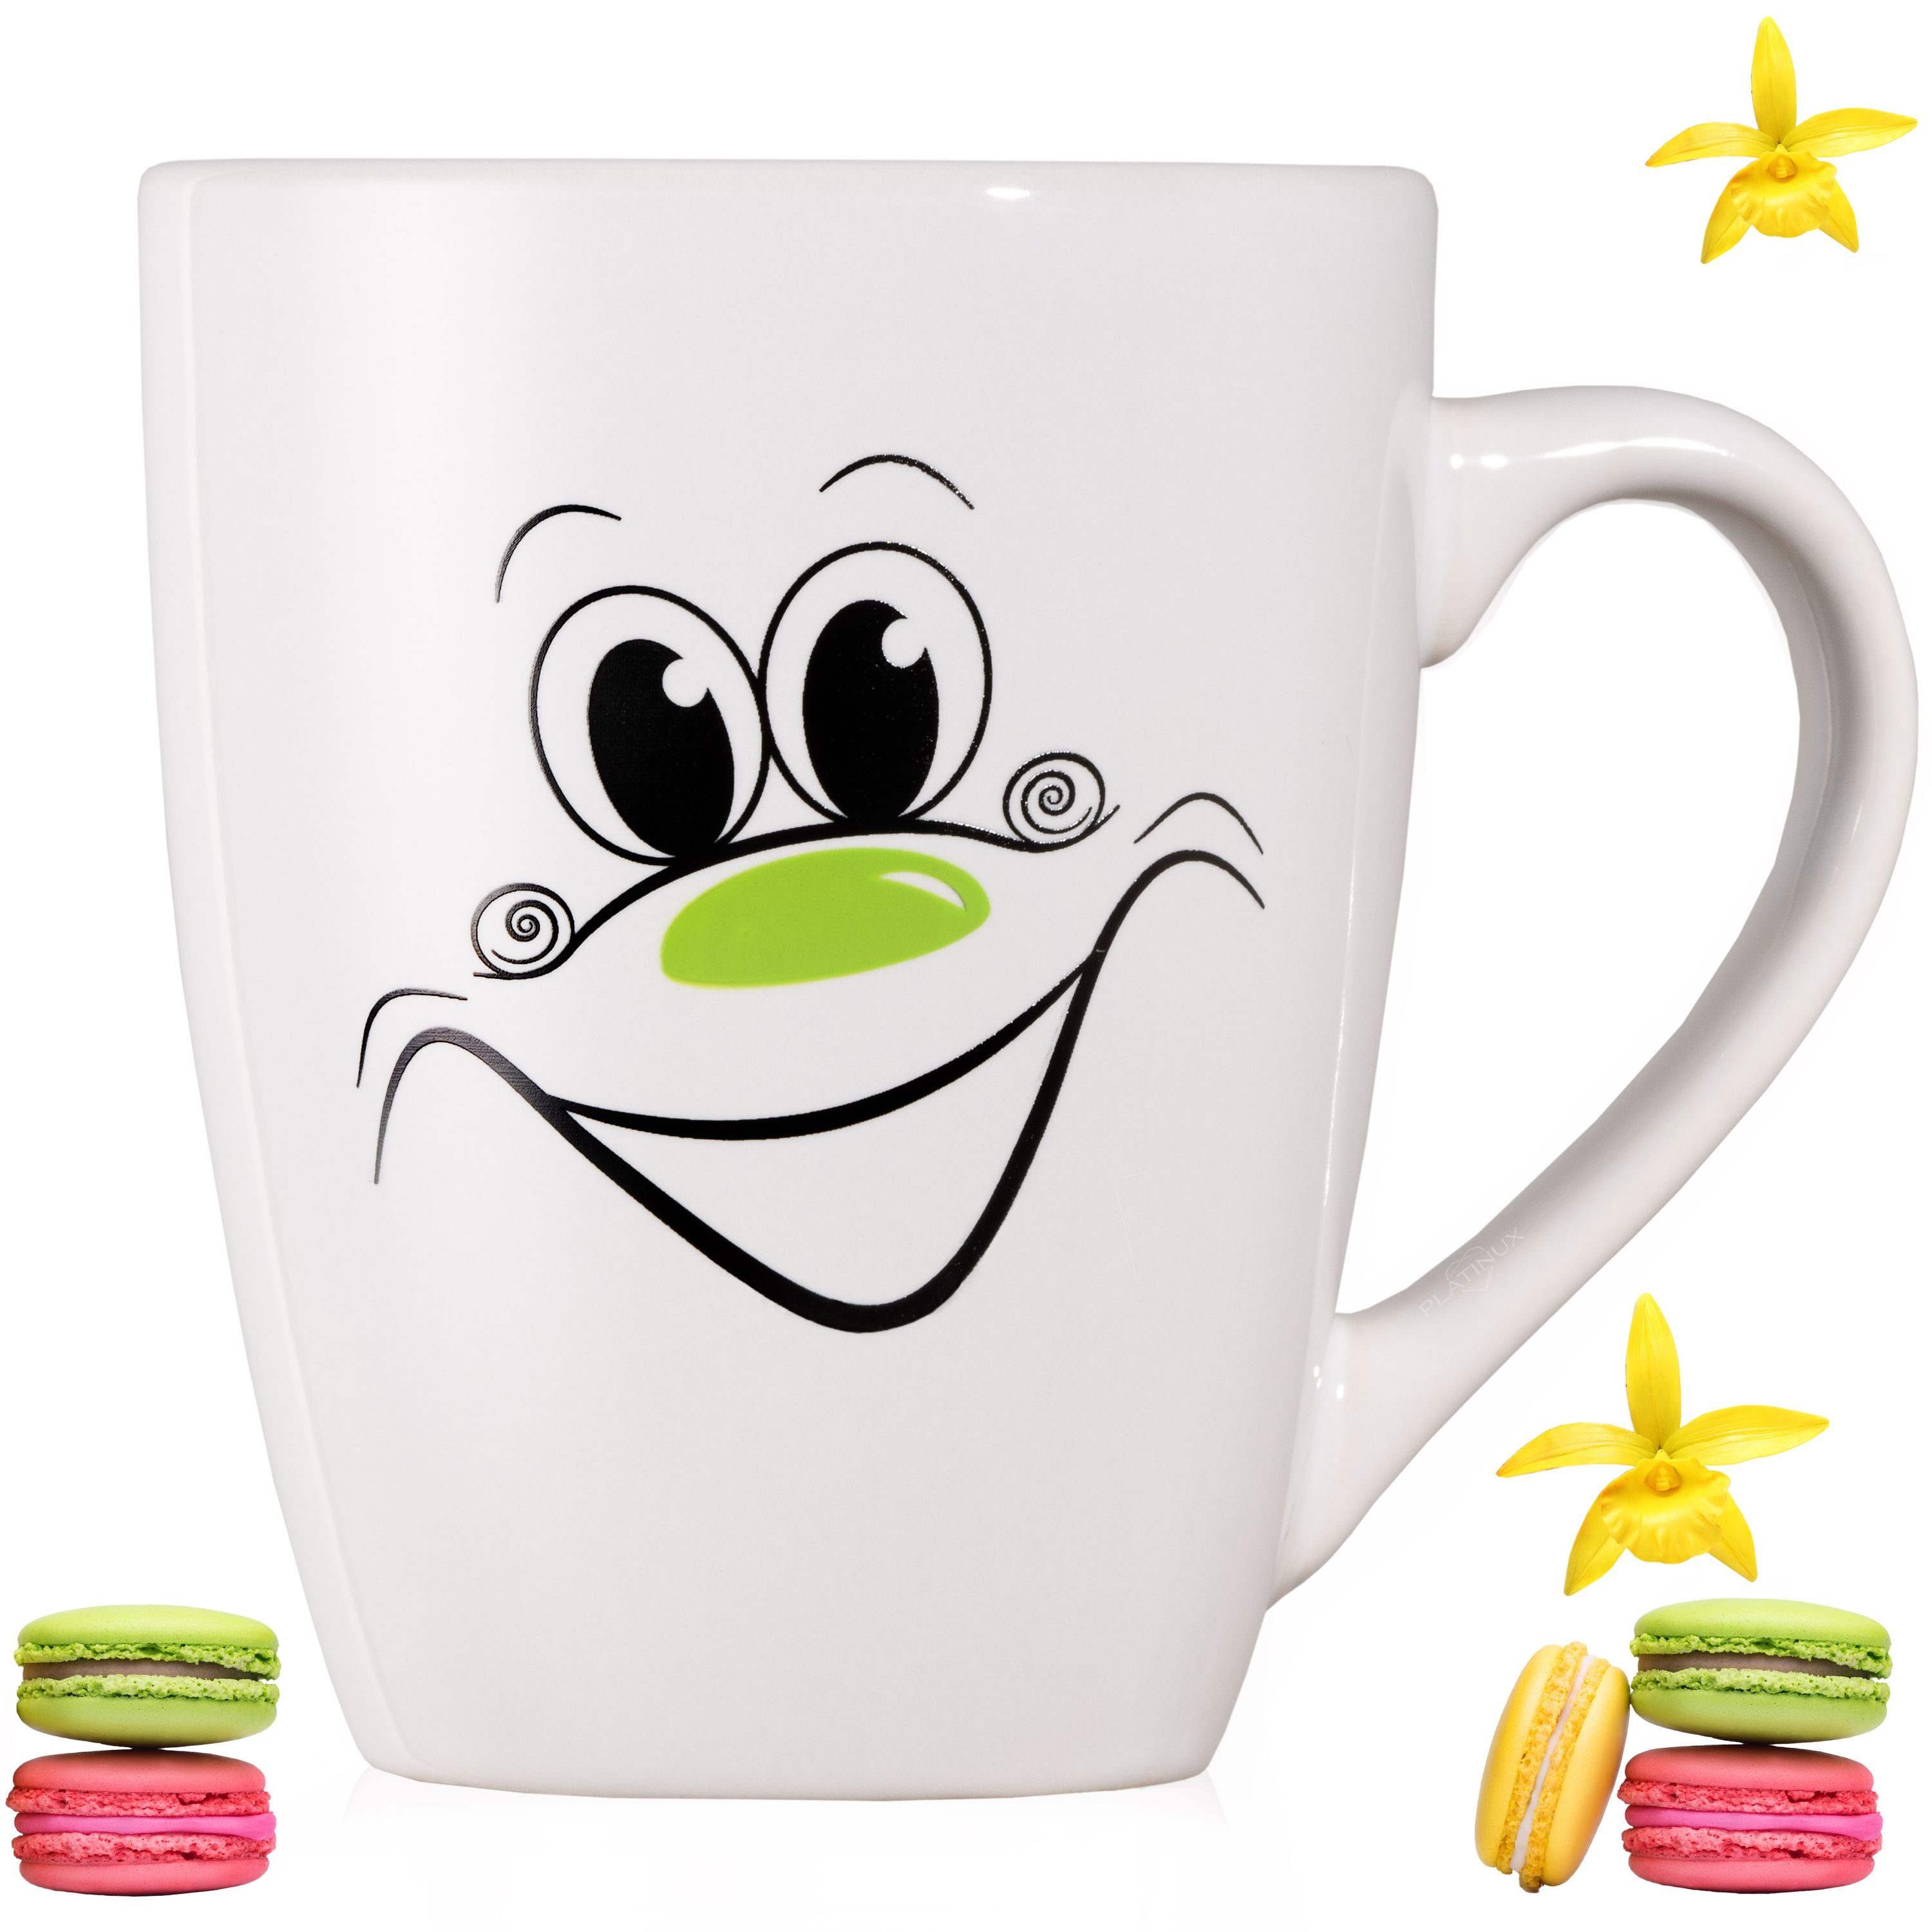 PLATINUX Tasse Kaffeetasse mit Karneval Teebecher lustigem Grün, Keramik, 300ml) (max. 250ml Teetasse Kaffeebecher Motiv lachendem